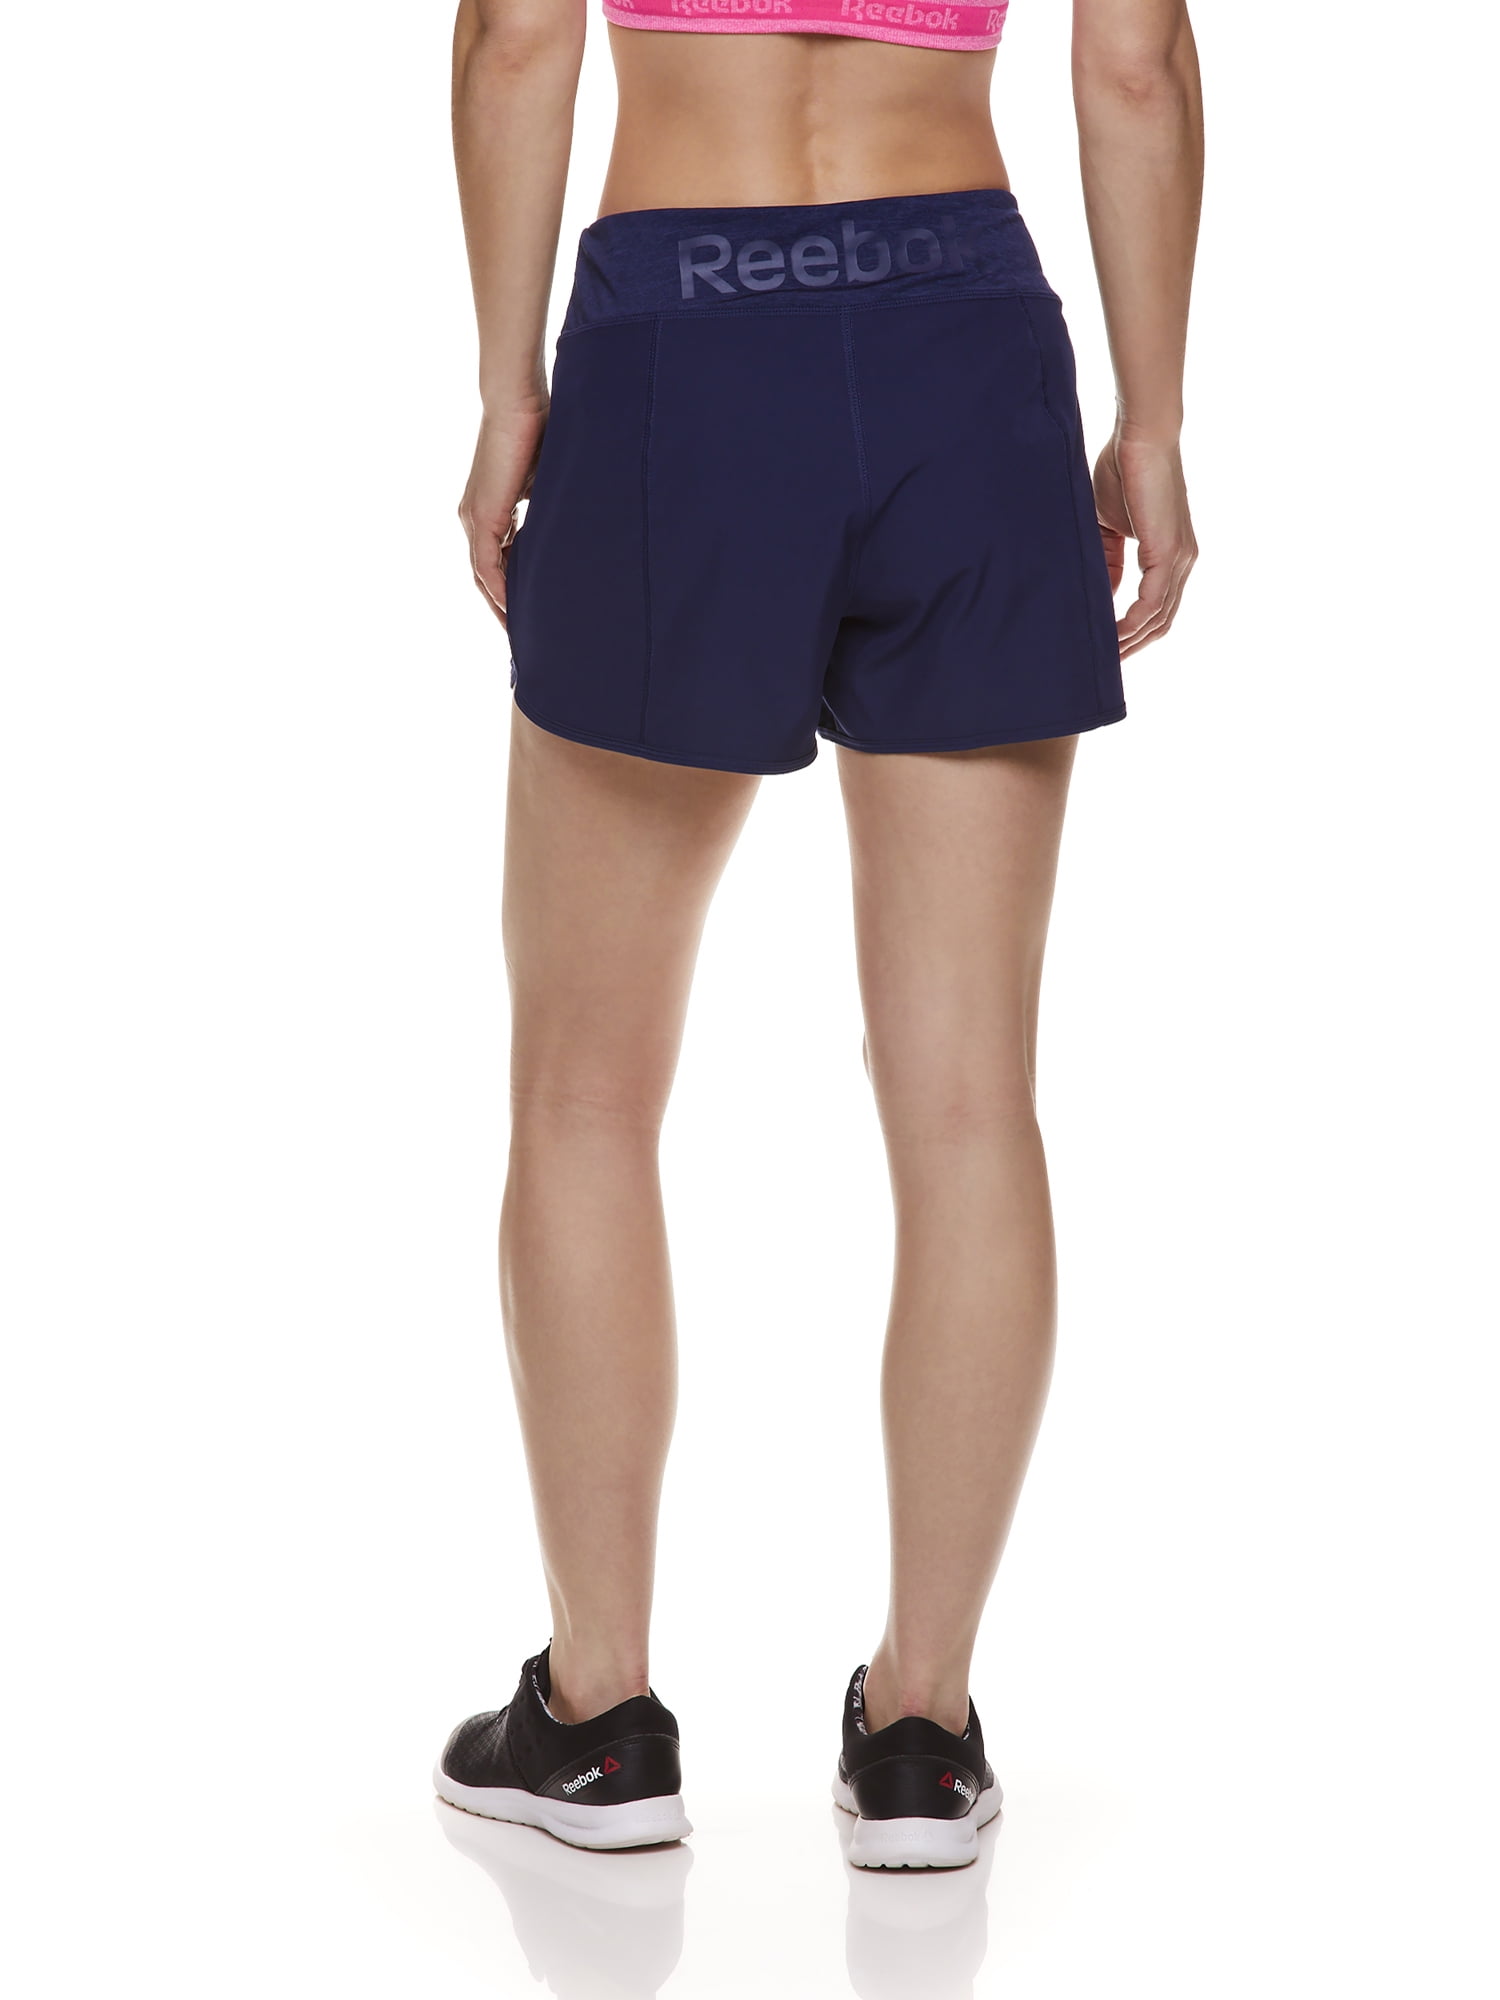 Reebok Women's Shorts -